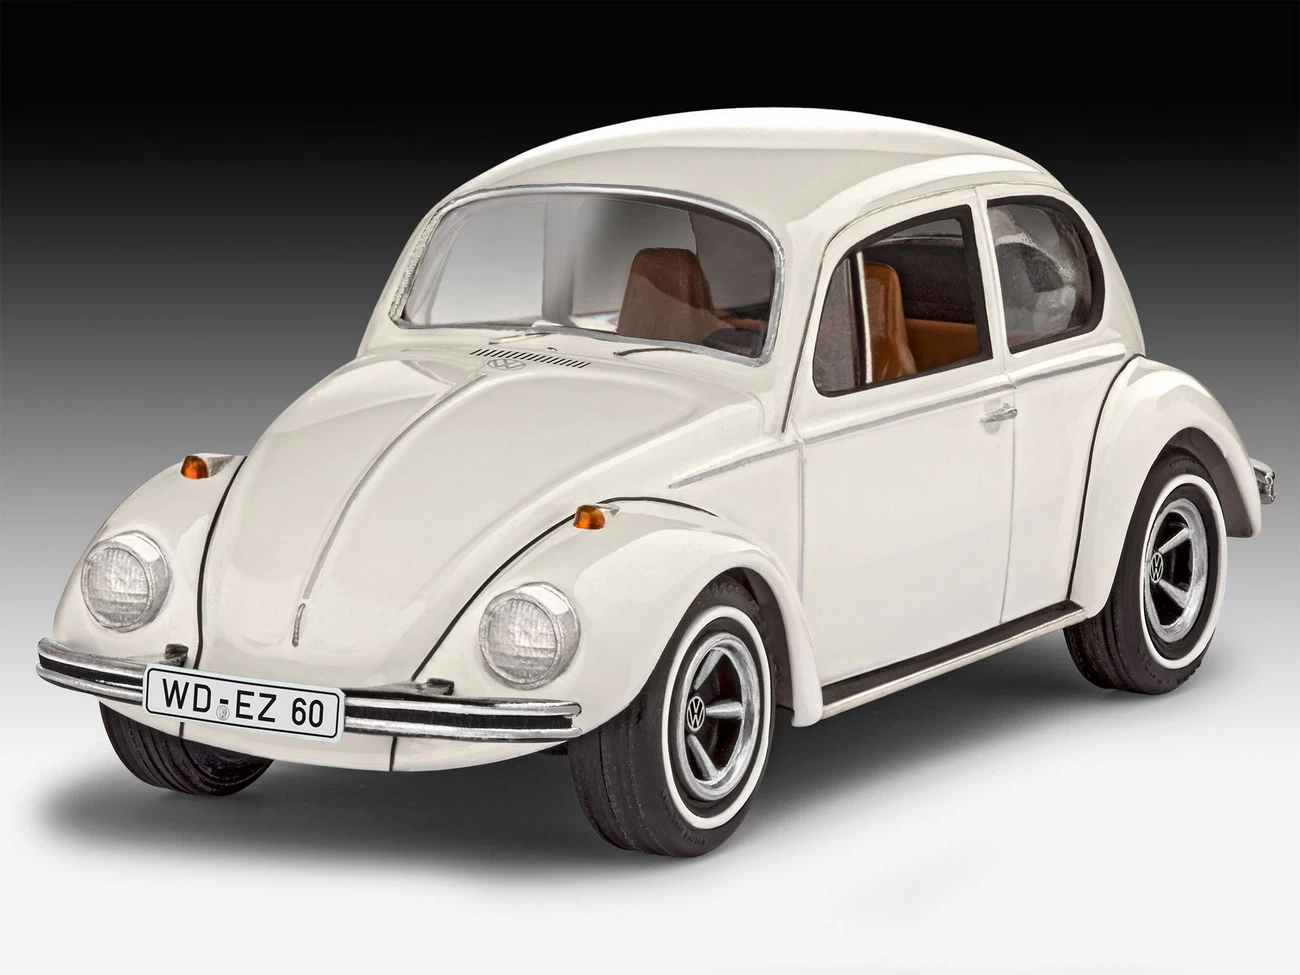 Revell 07681 - VW Beetle